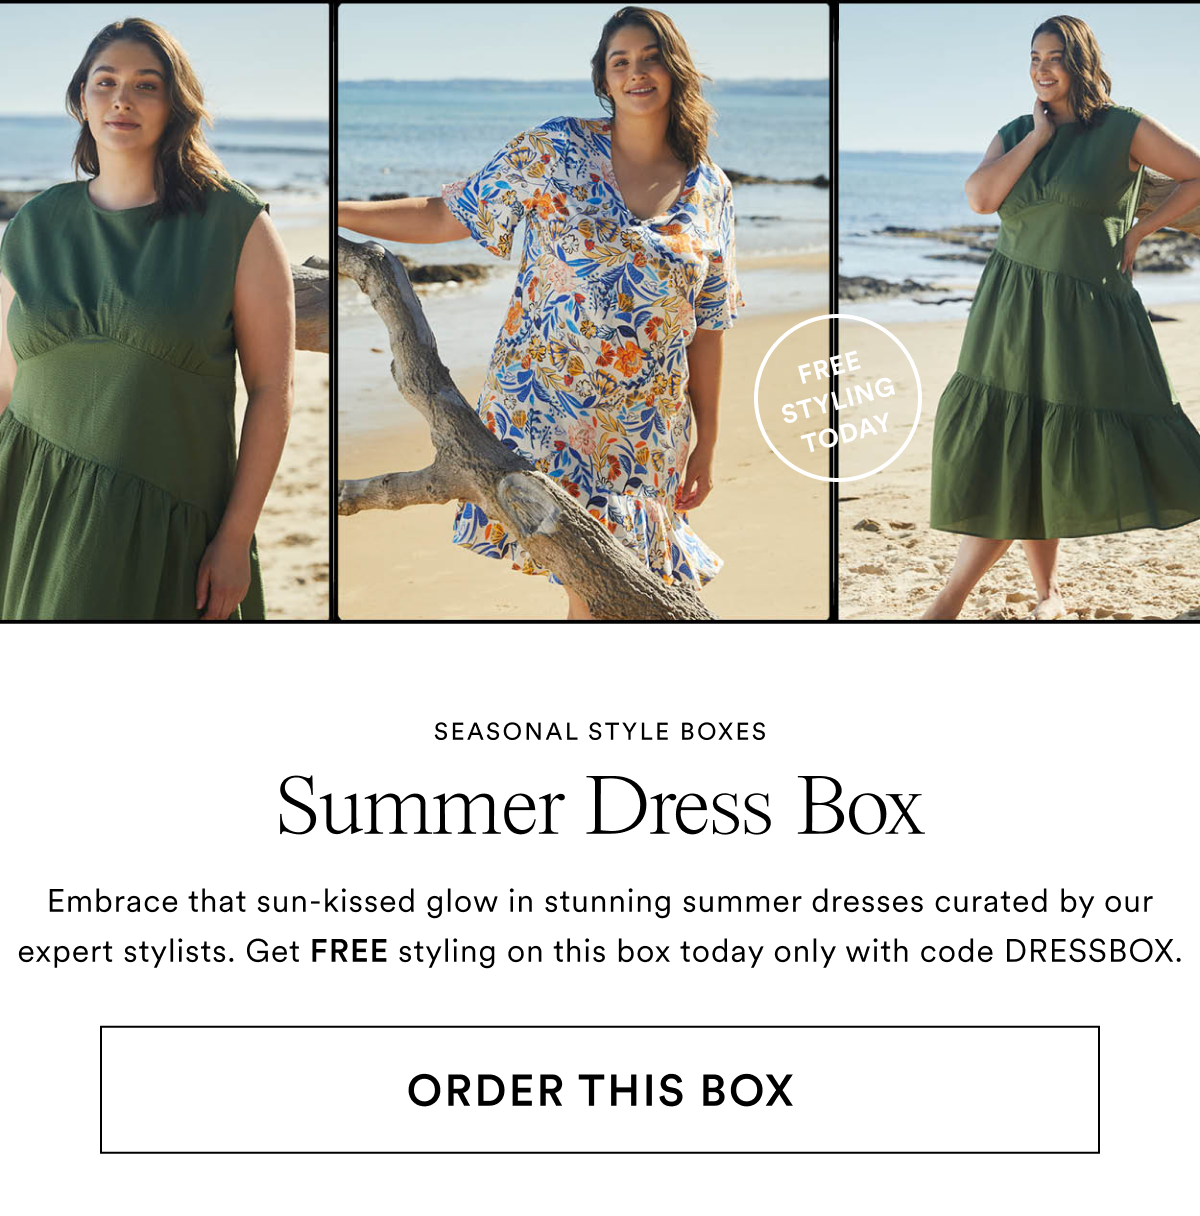 Summer Dress Box. Order This Box